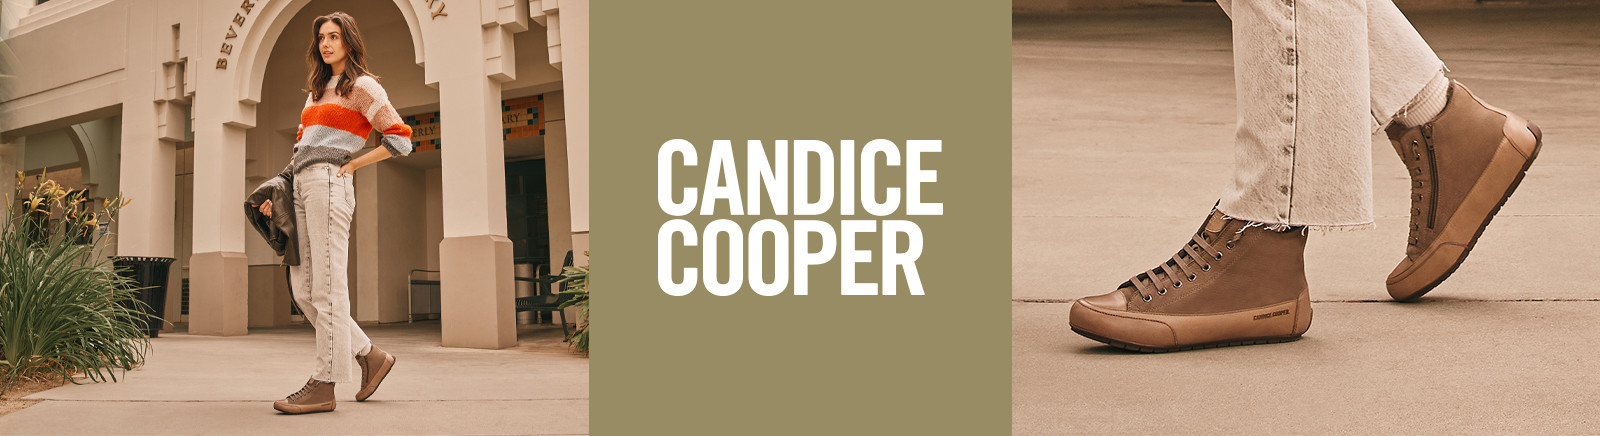 Prange: Candice Cooper Chelsea Boots für Damen online shoppen